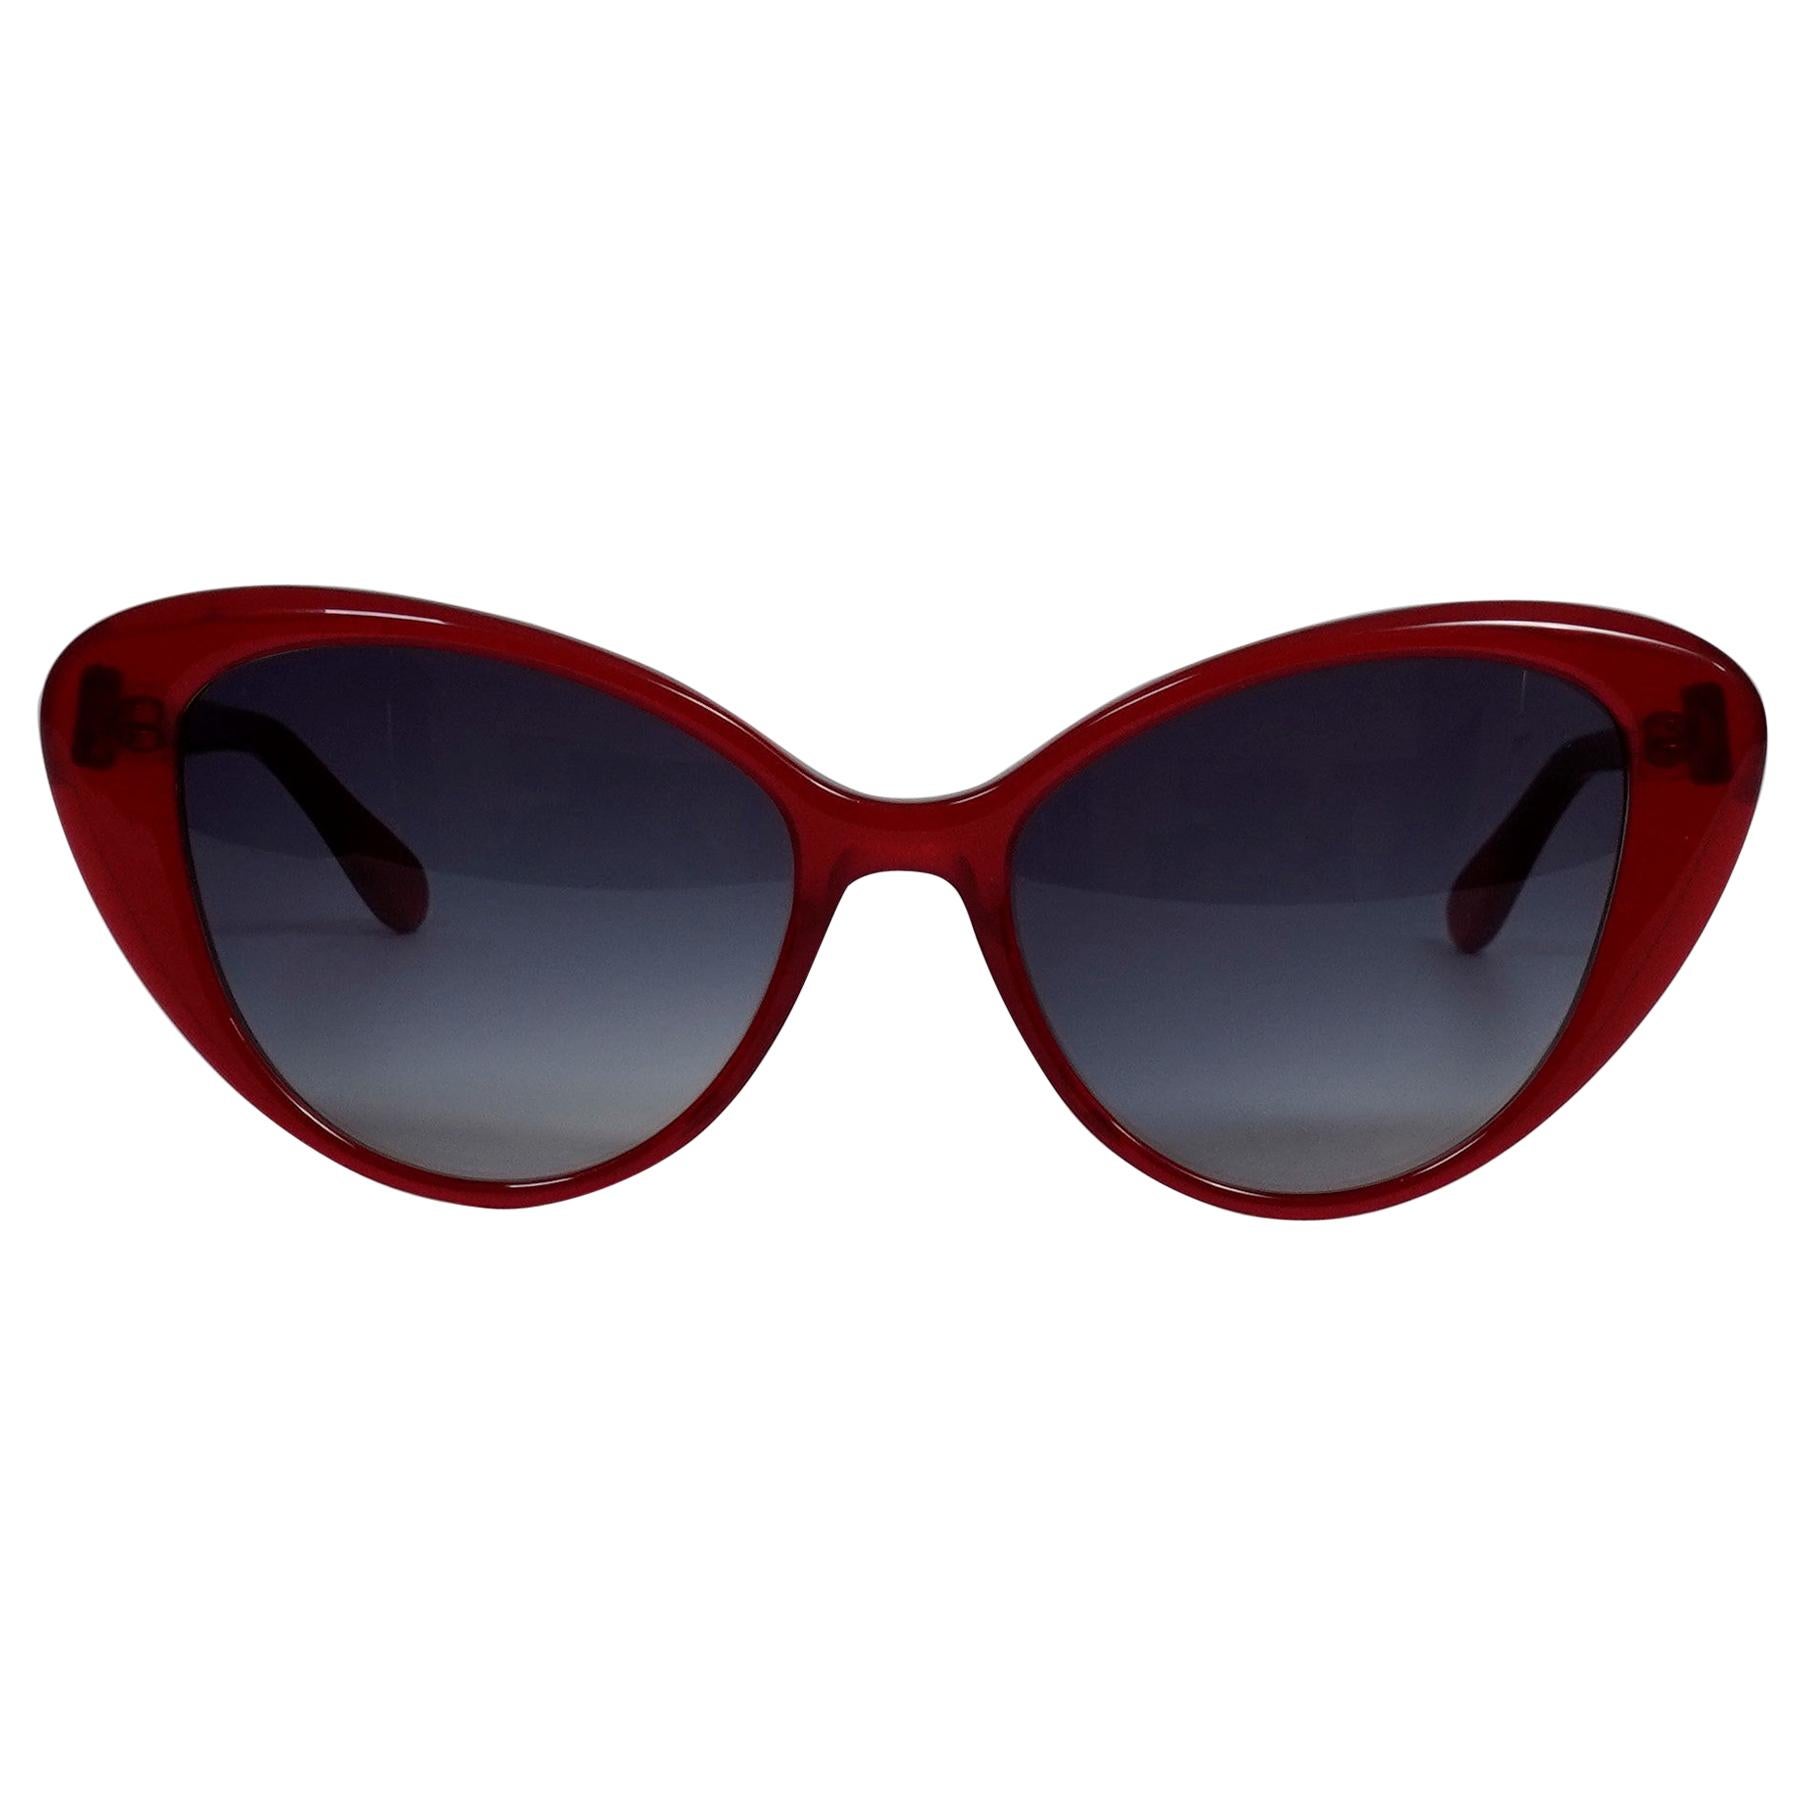 Aru Eyewear Red sunglasses